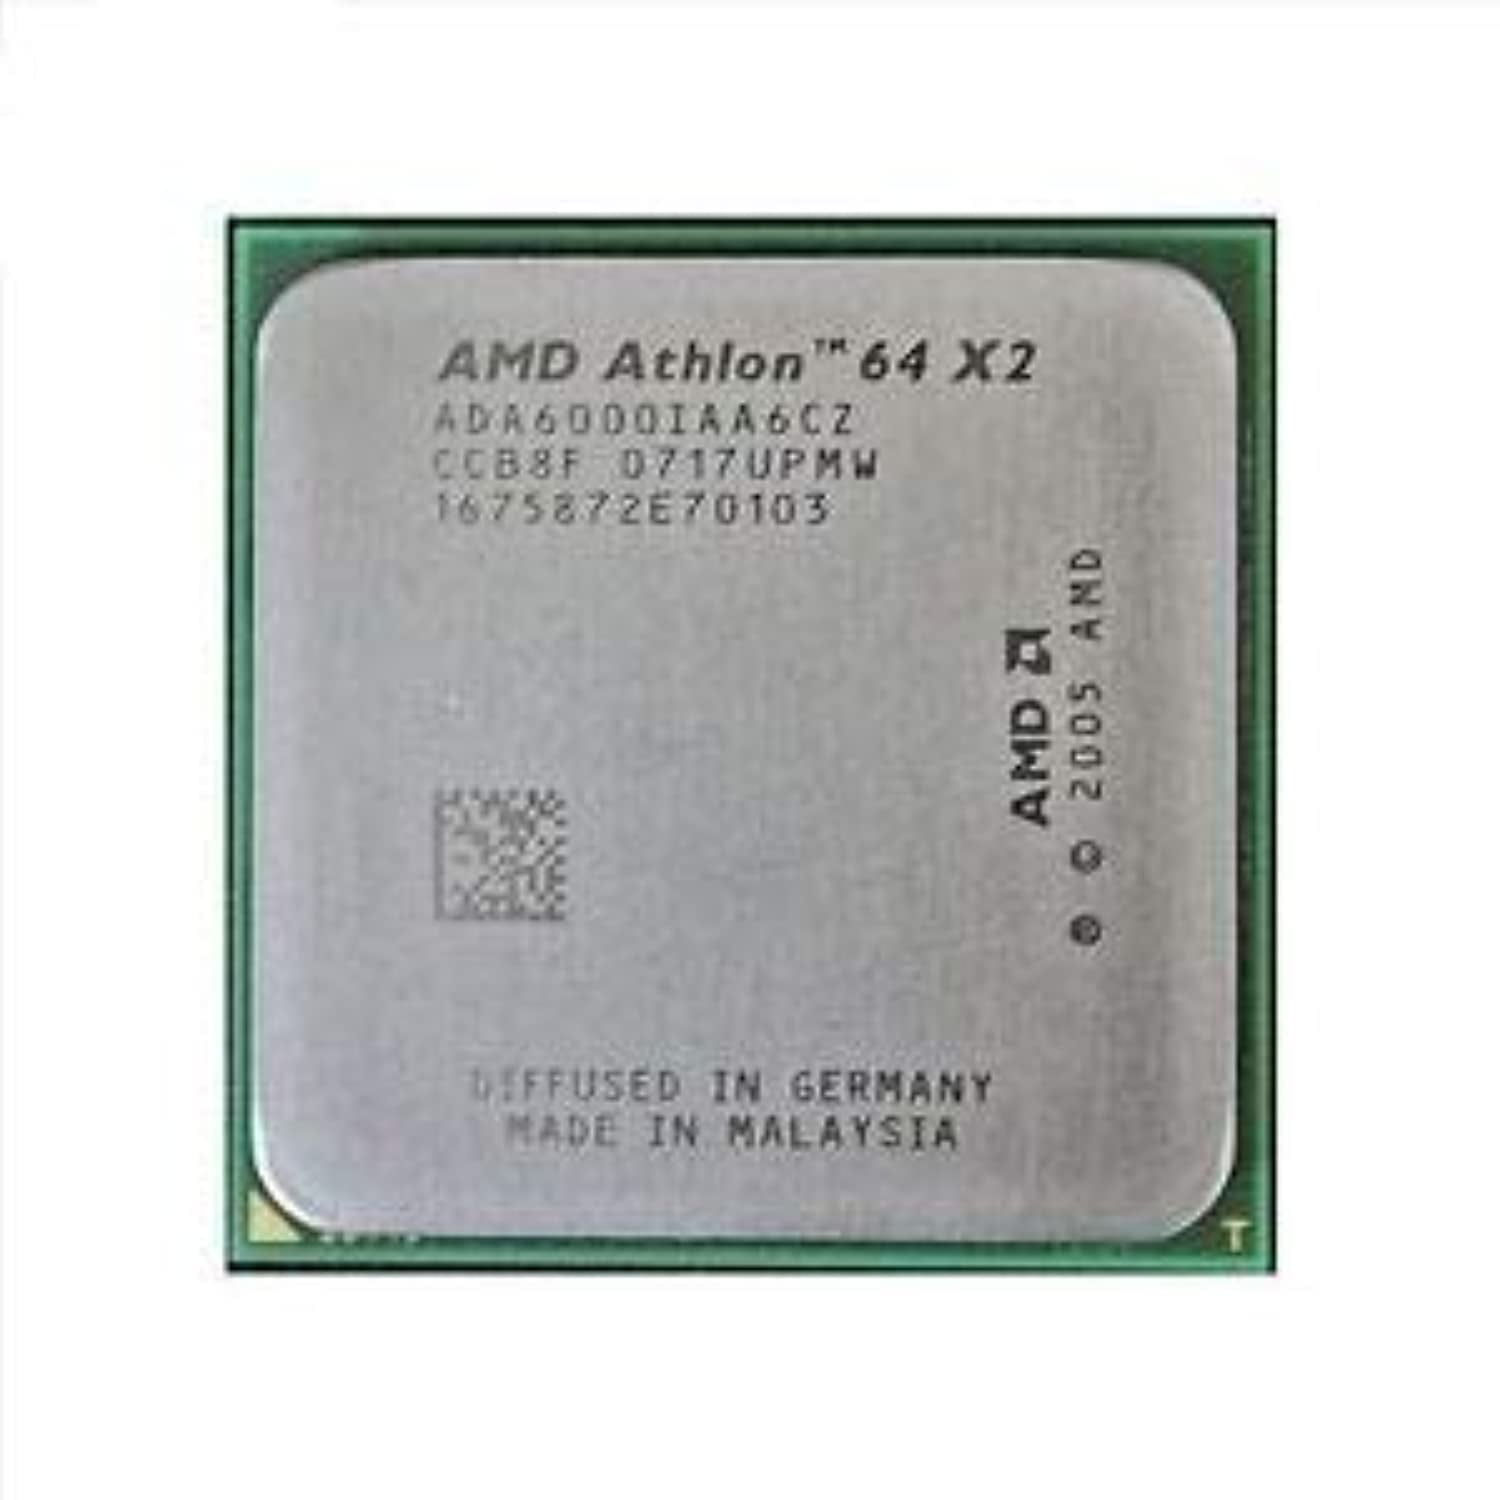 Сравнение amd athlon. AMD Athlon 2005. AMD Athlon 64 x2 ada5600iaa6cz. AMD Athlon(TM) 64 x2 Dual Core Processor 6000+ 3.00 GHZ. АМД Атлон 64 le-1600.